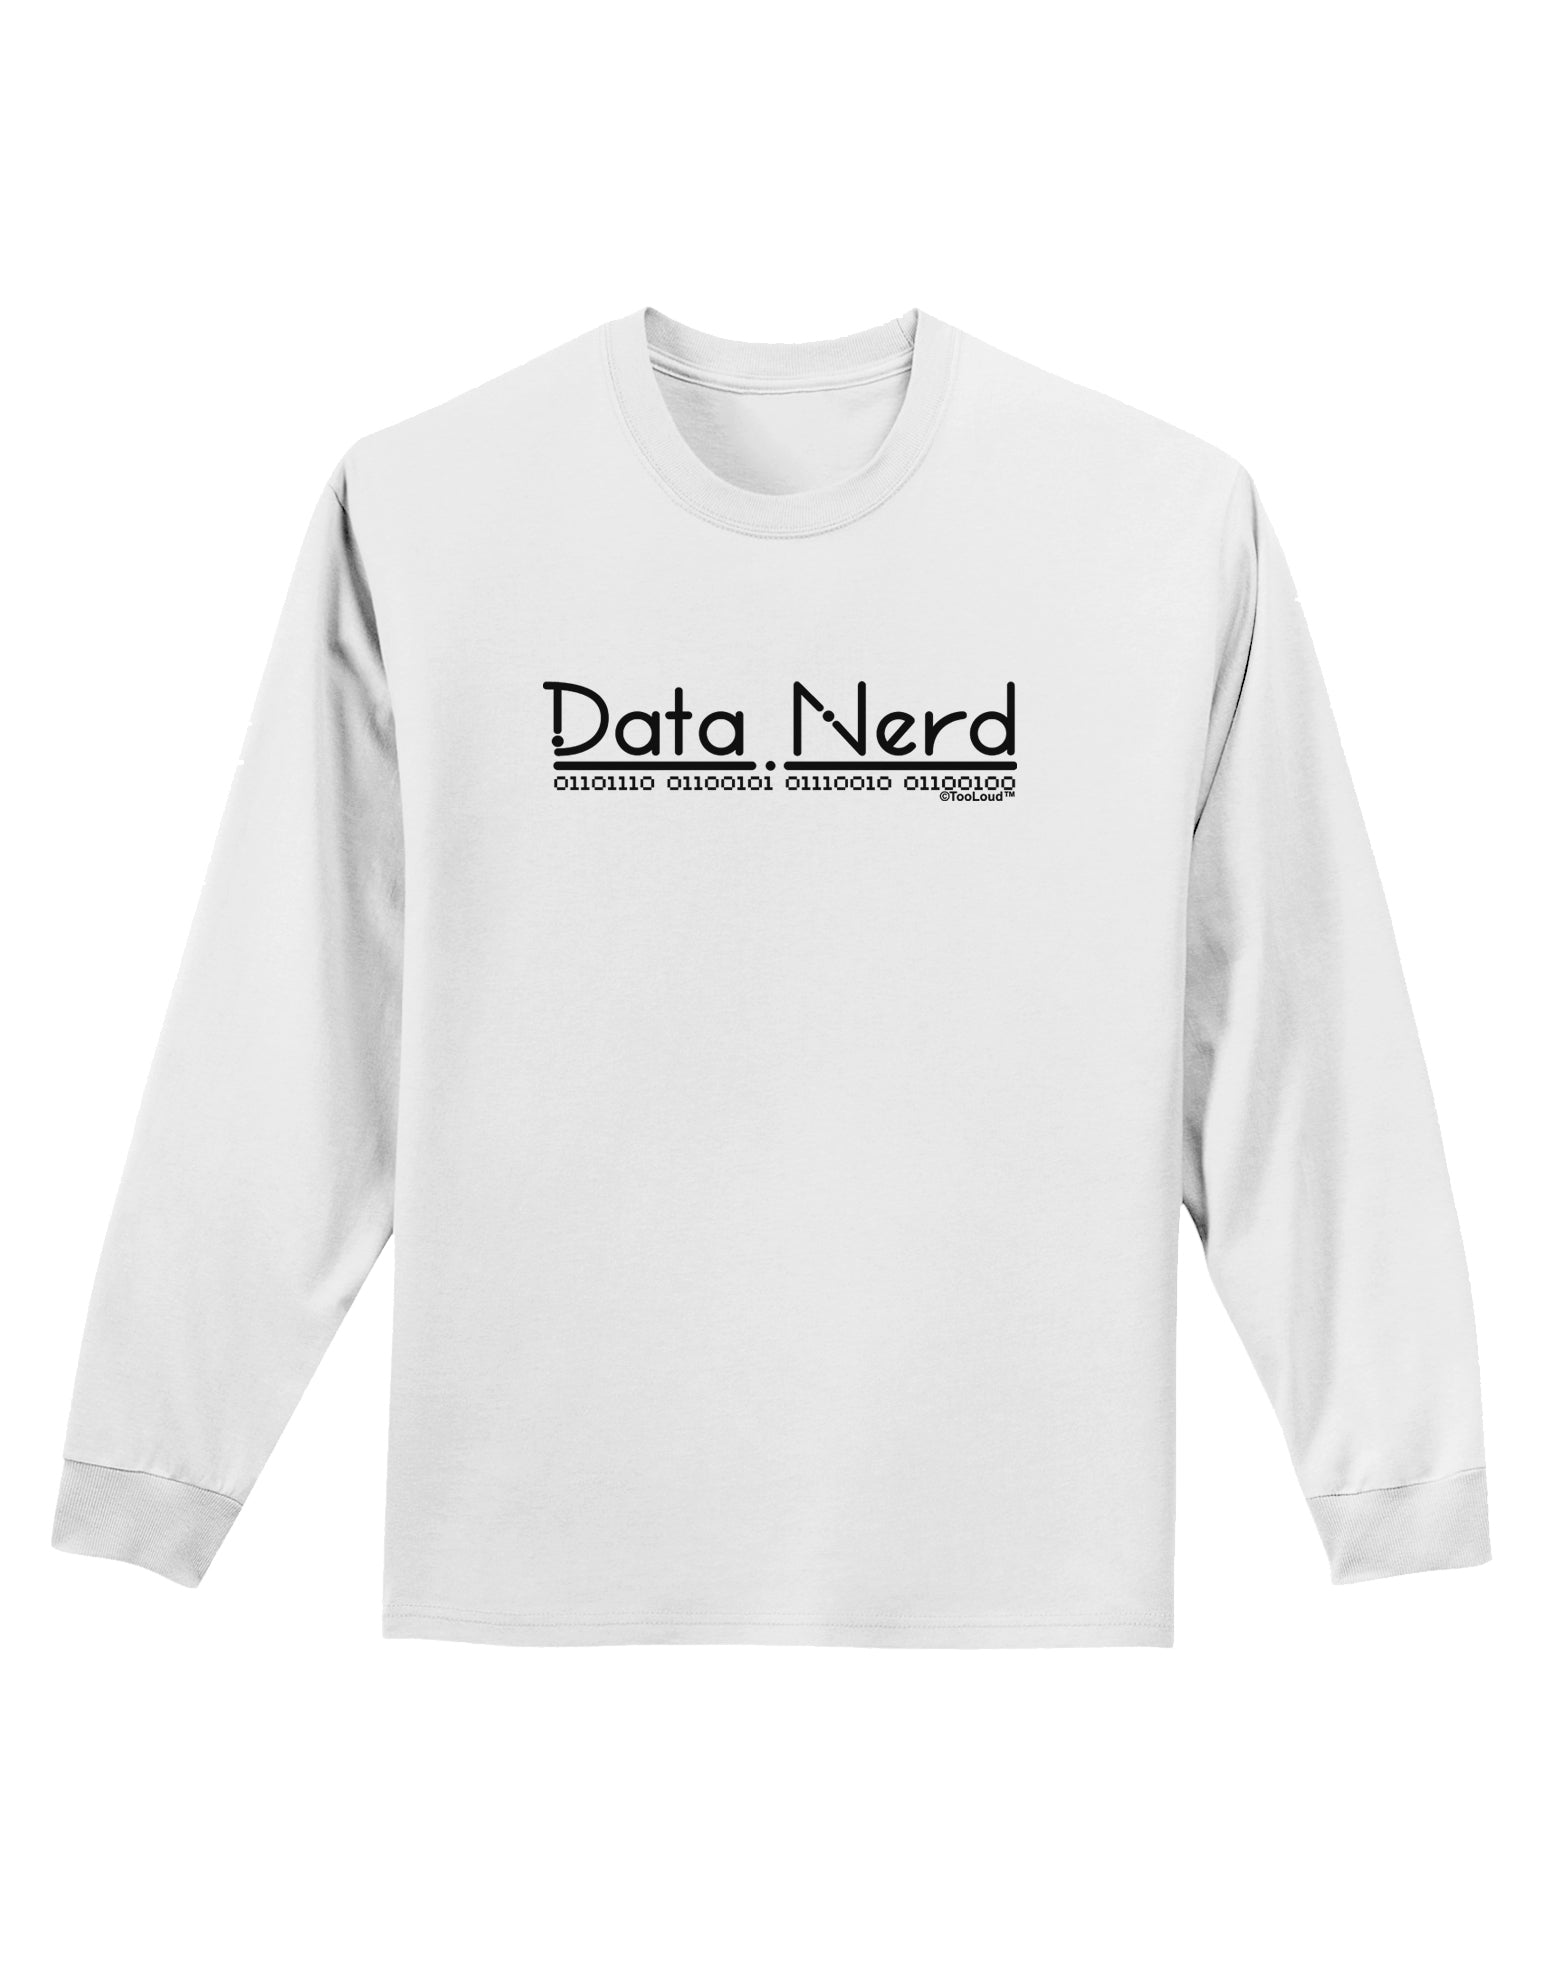 Data Nerd Adult Long Sleeve Shirt by TooLoud